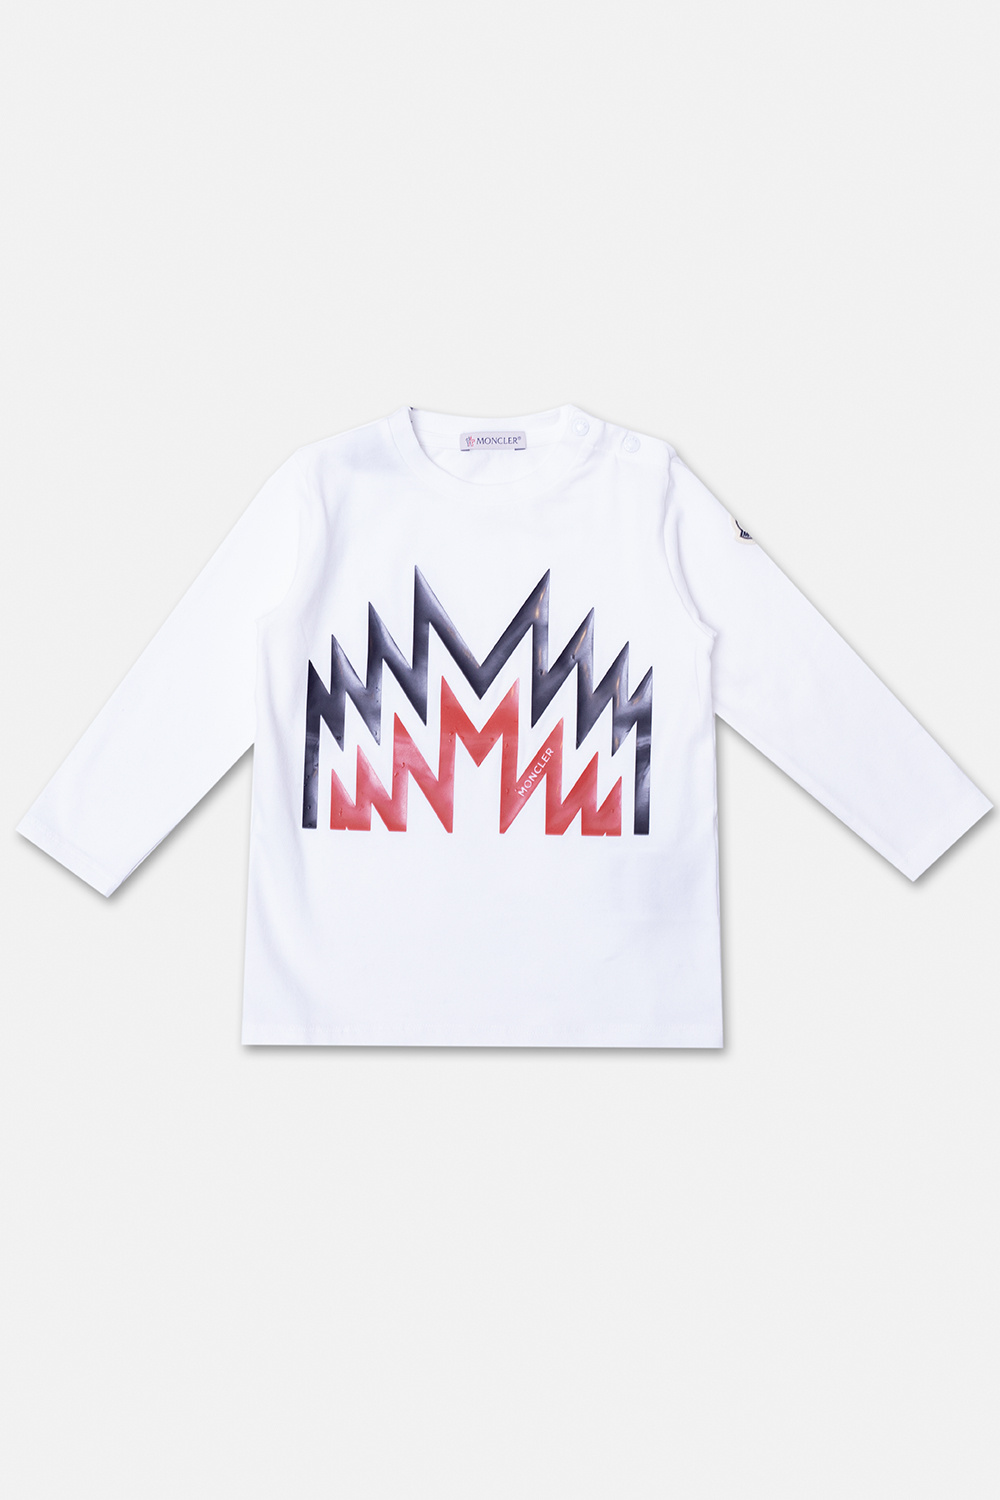 Moncler Enfant Kent & Curwen striped logo-patch T-shirt